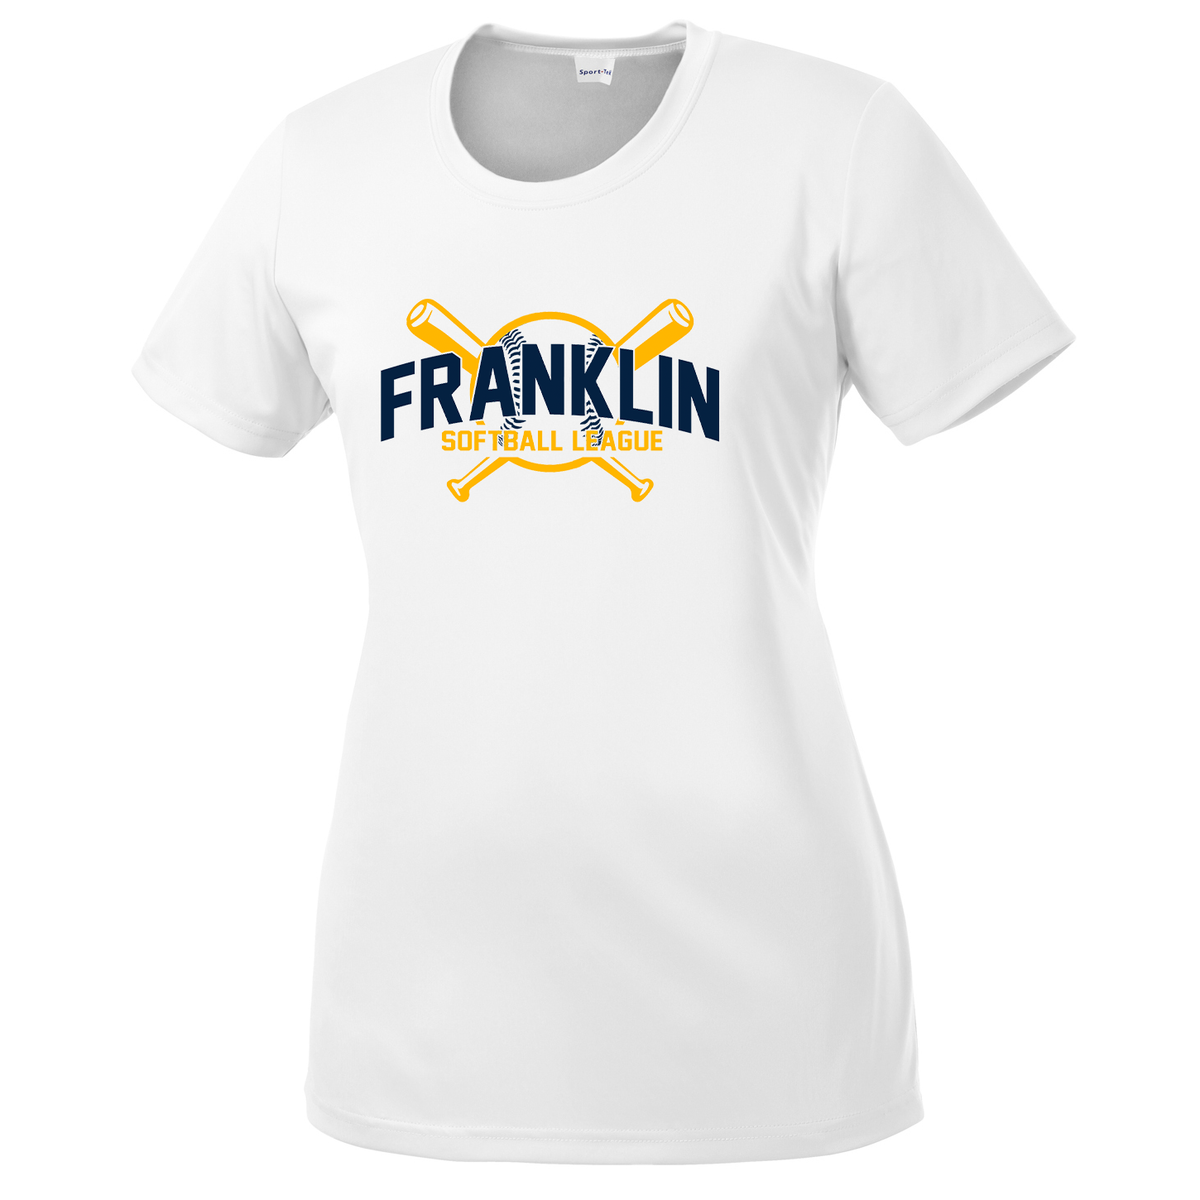 Franklin Township Softball League Women's Performance Tee